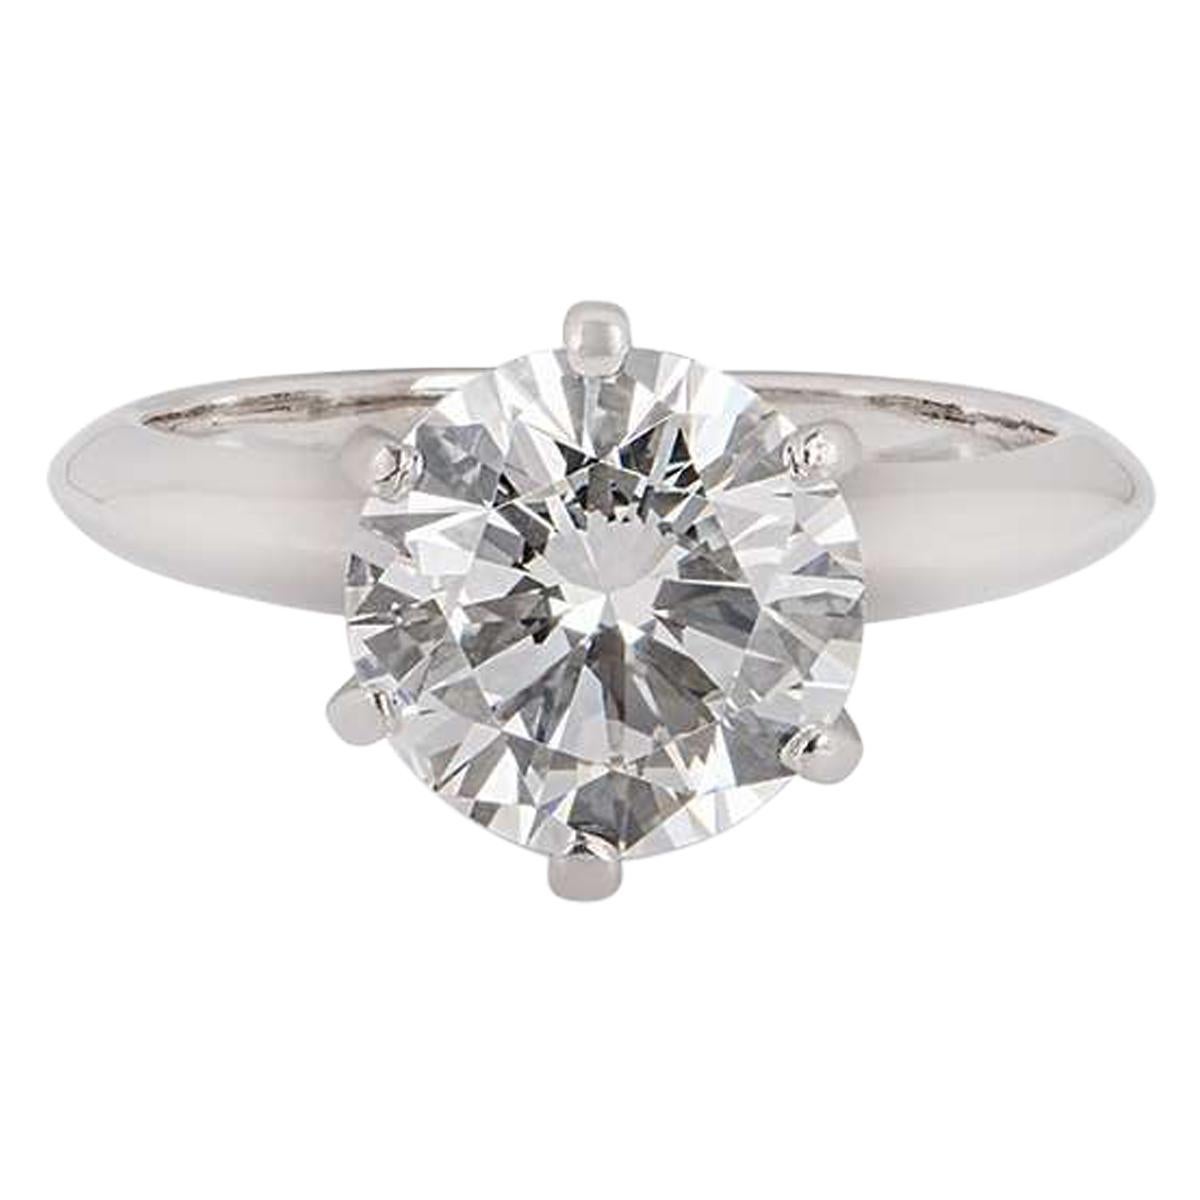 Tiffany & Co. Round Brilliant Cut Diamond Ring 2.35 Carat GIA Certified